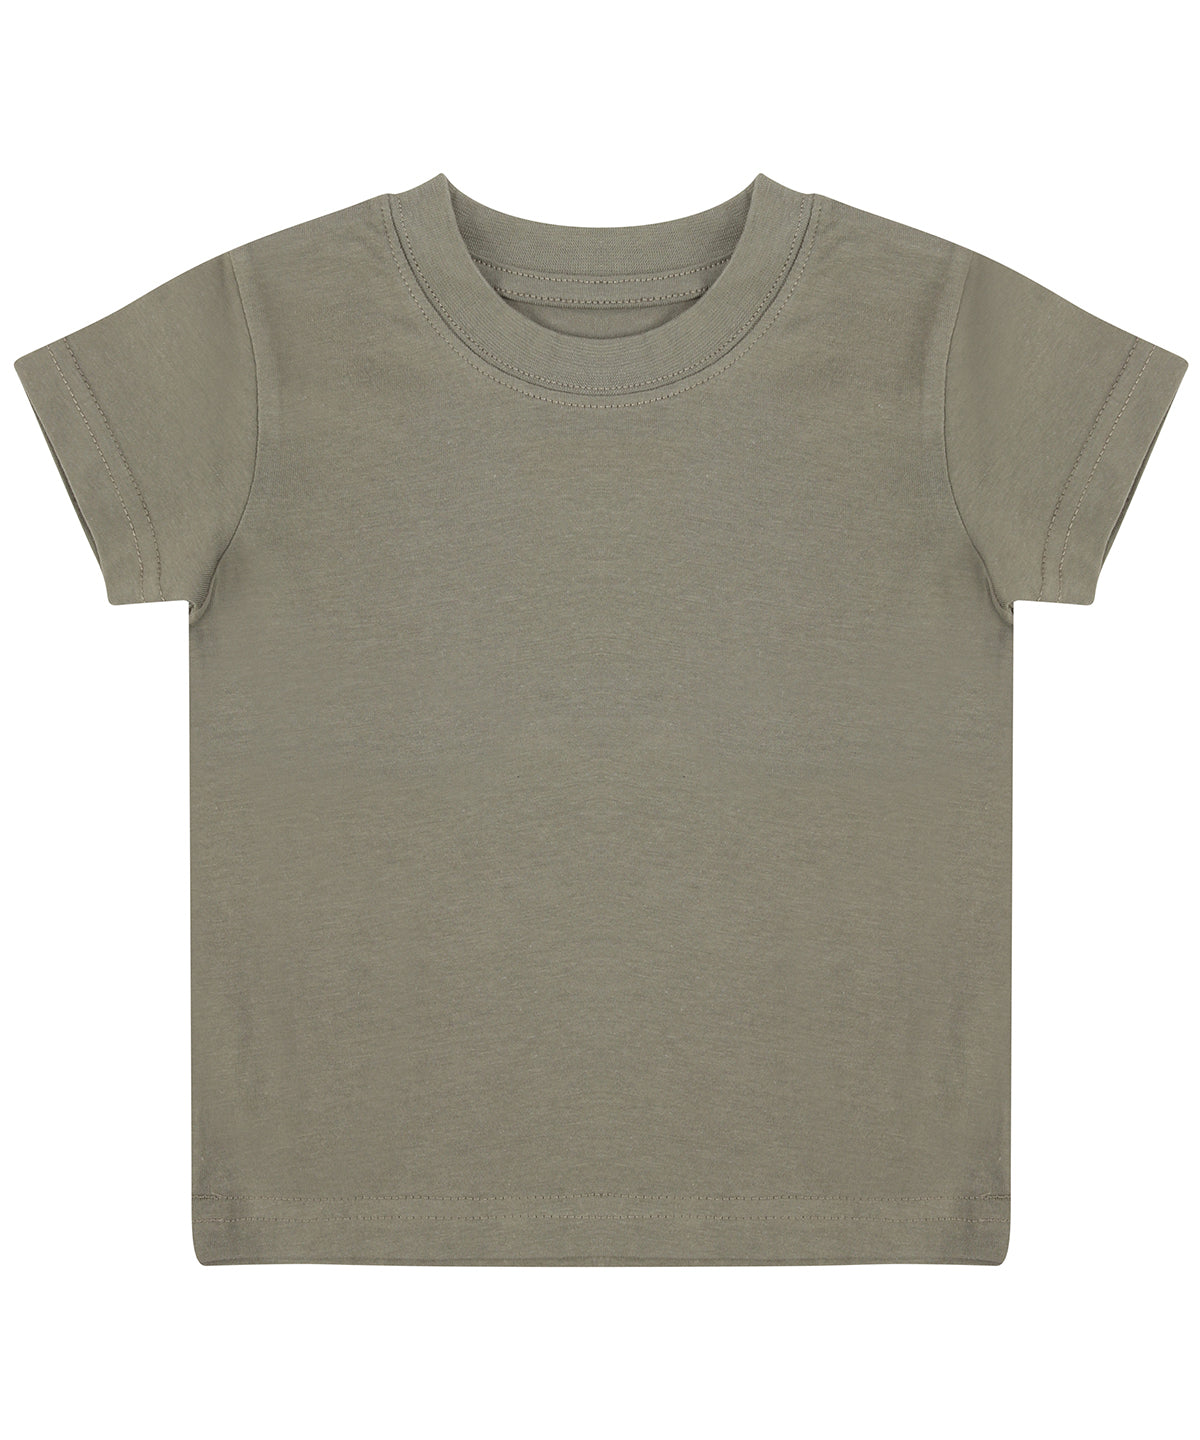 Personalised T-Shirts - Black Larkwood Baby/toddler t-shirt